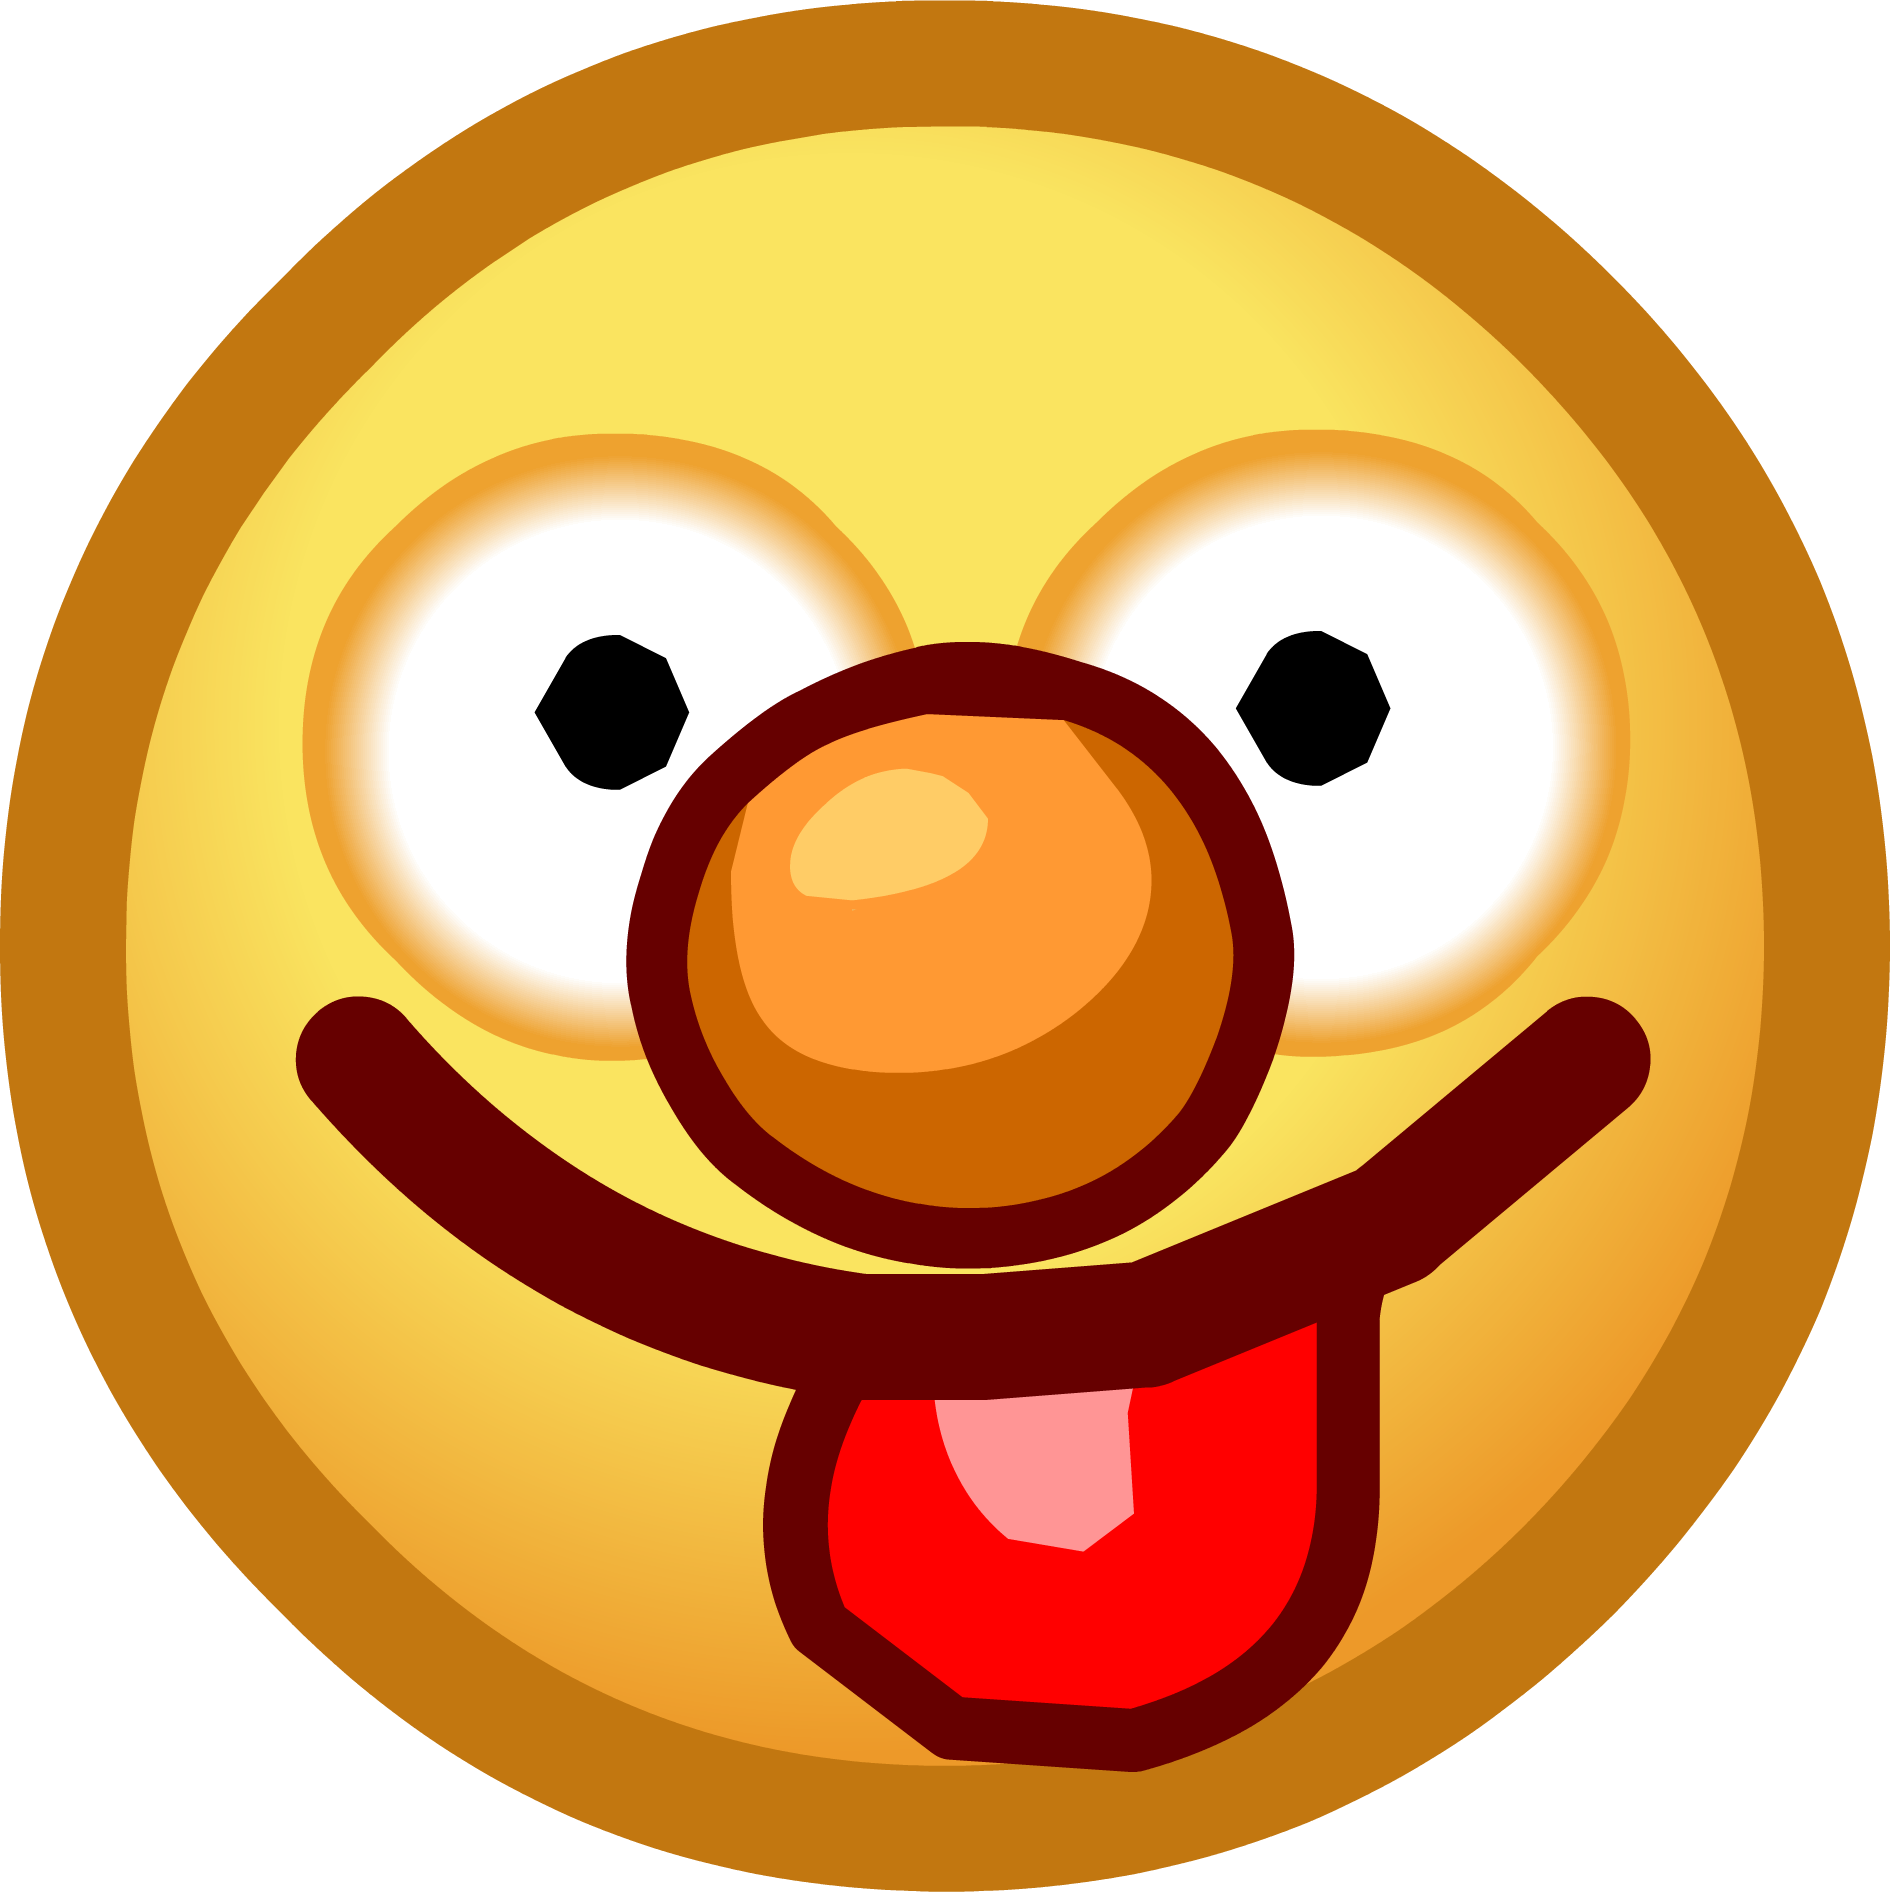 List of Emoticons | Club Penguin Wiki | Fandom powered by Wikia